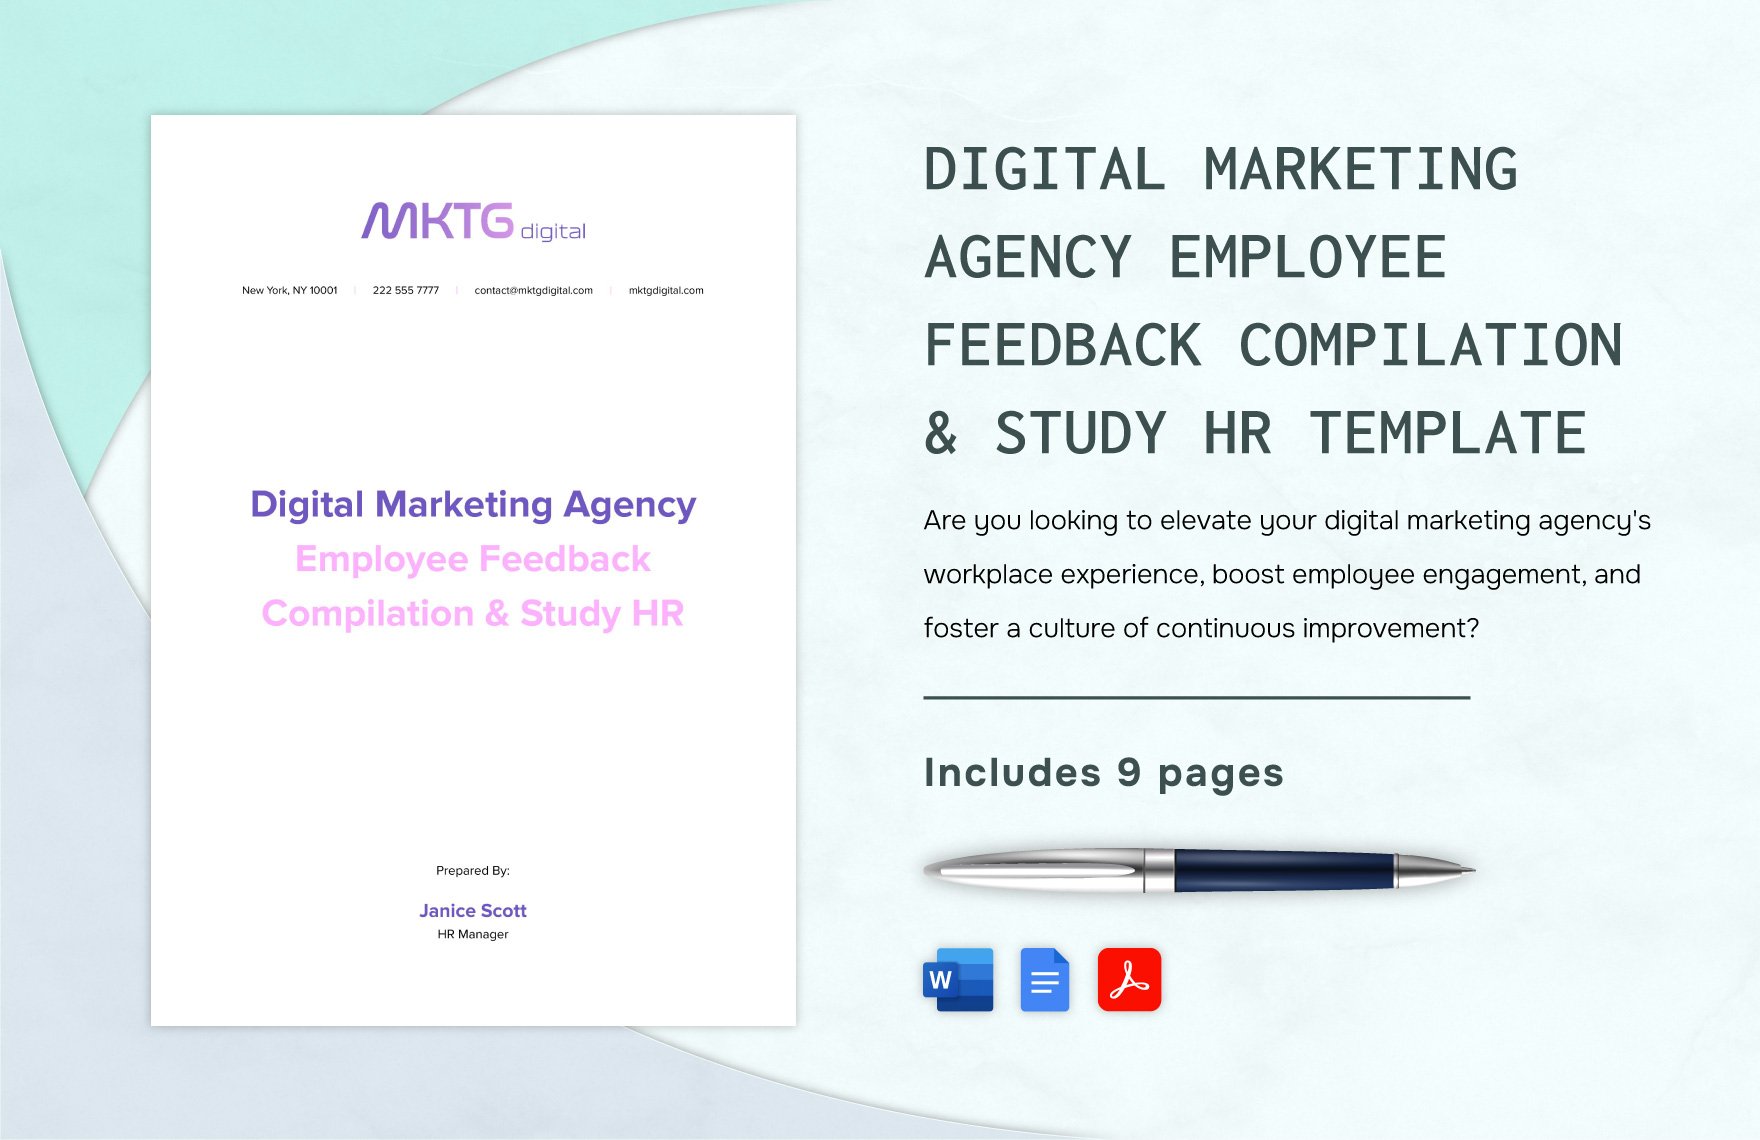 Digital Marketing Agency Employee Feedback Compilation & Study HR Template in Word, Google Docs, PDF